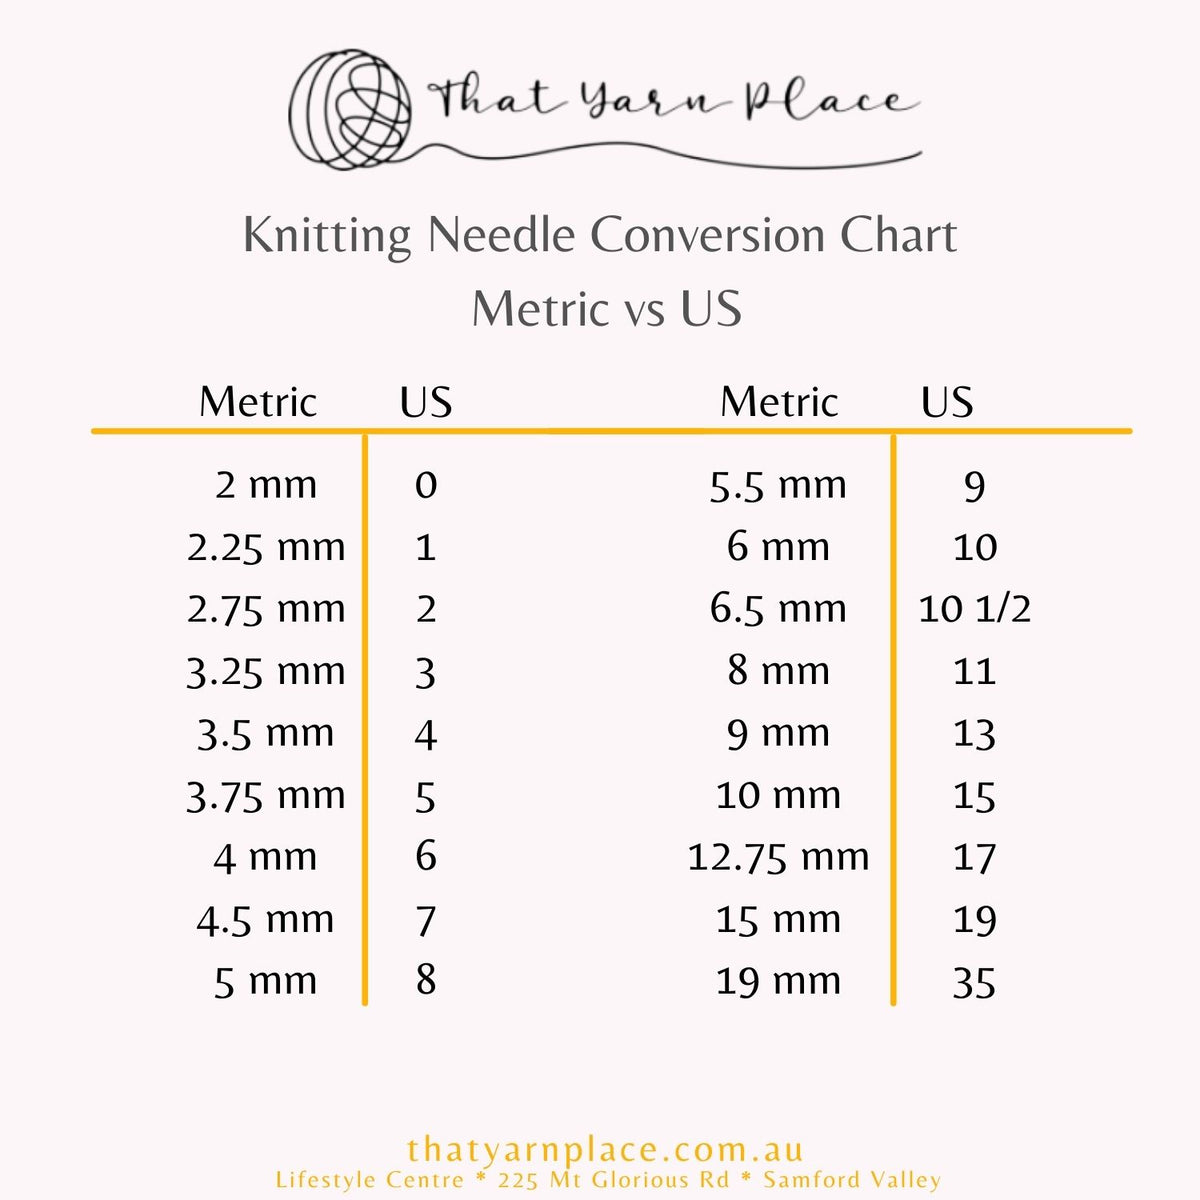 Knitting Needle Size Conversion Chart Metric vs US That Yarn Place